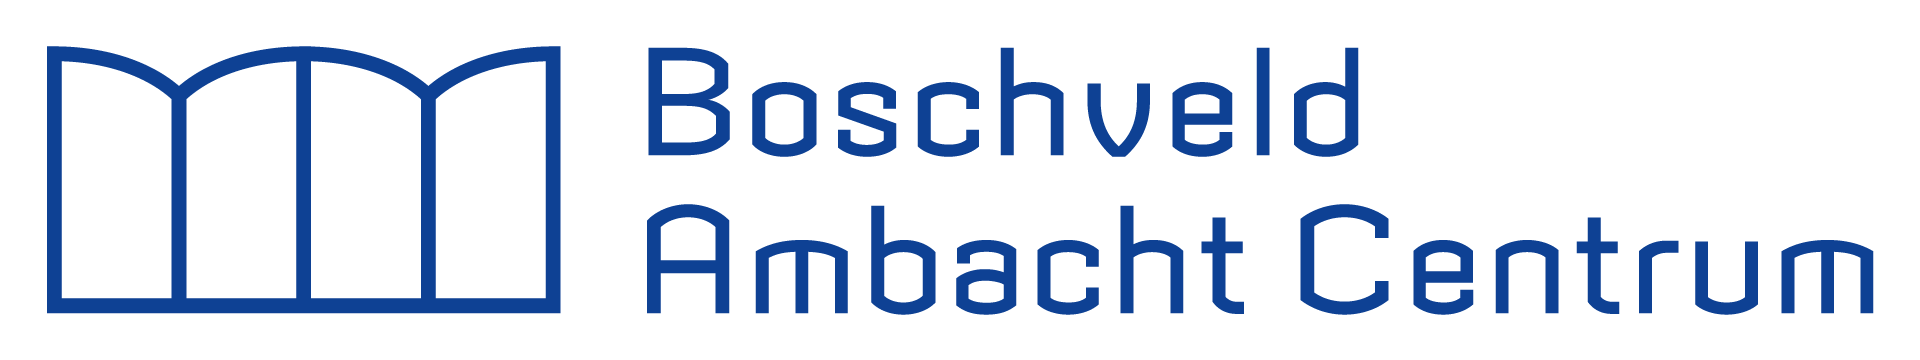 Boschveld Ambacht Centrum